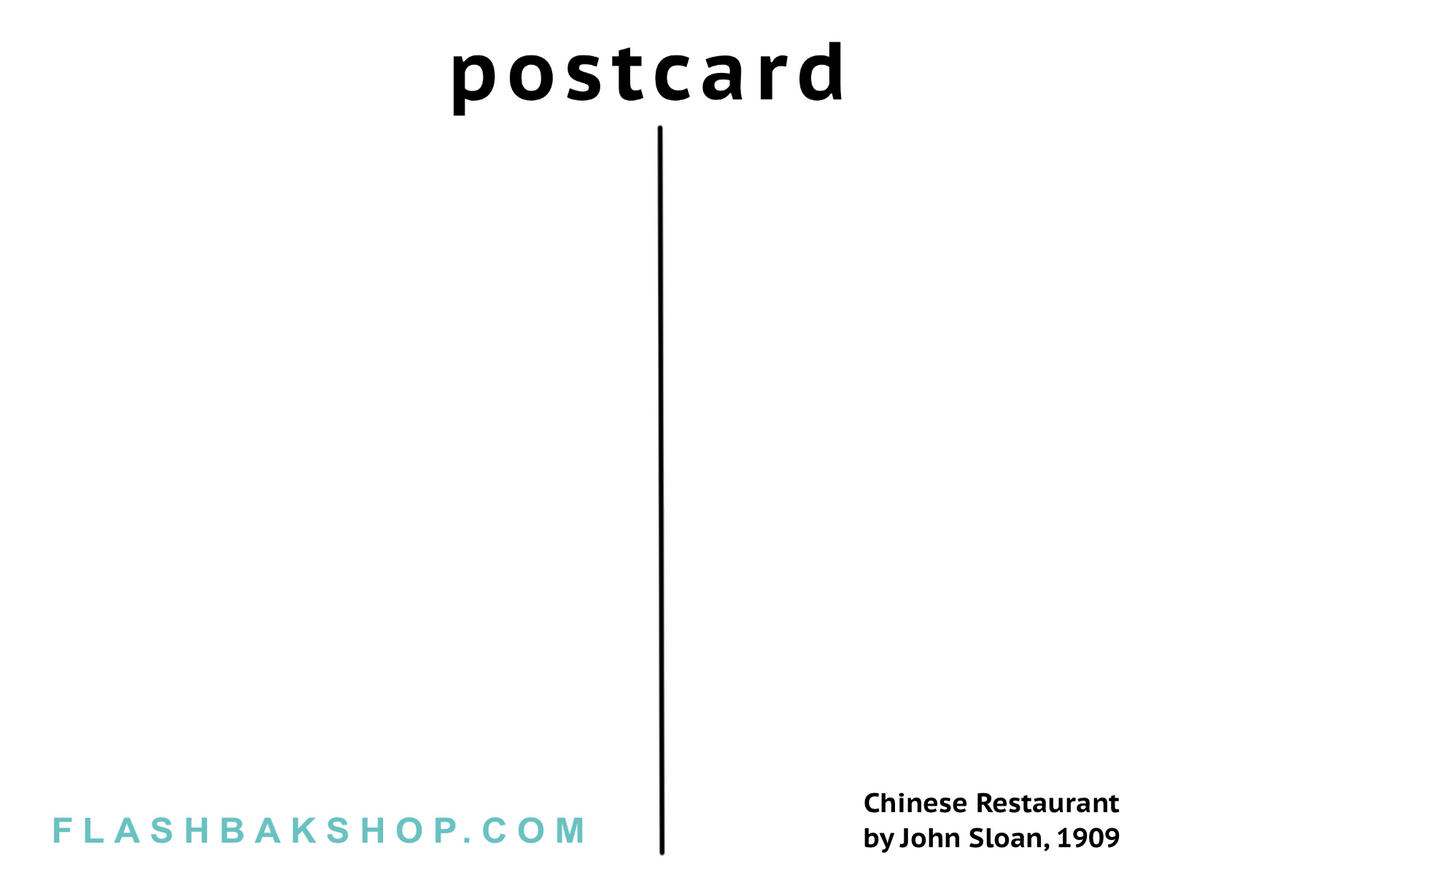 Chinese Restaurant by John Sloan, 1909 - Postcard